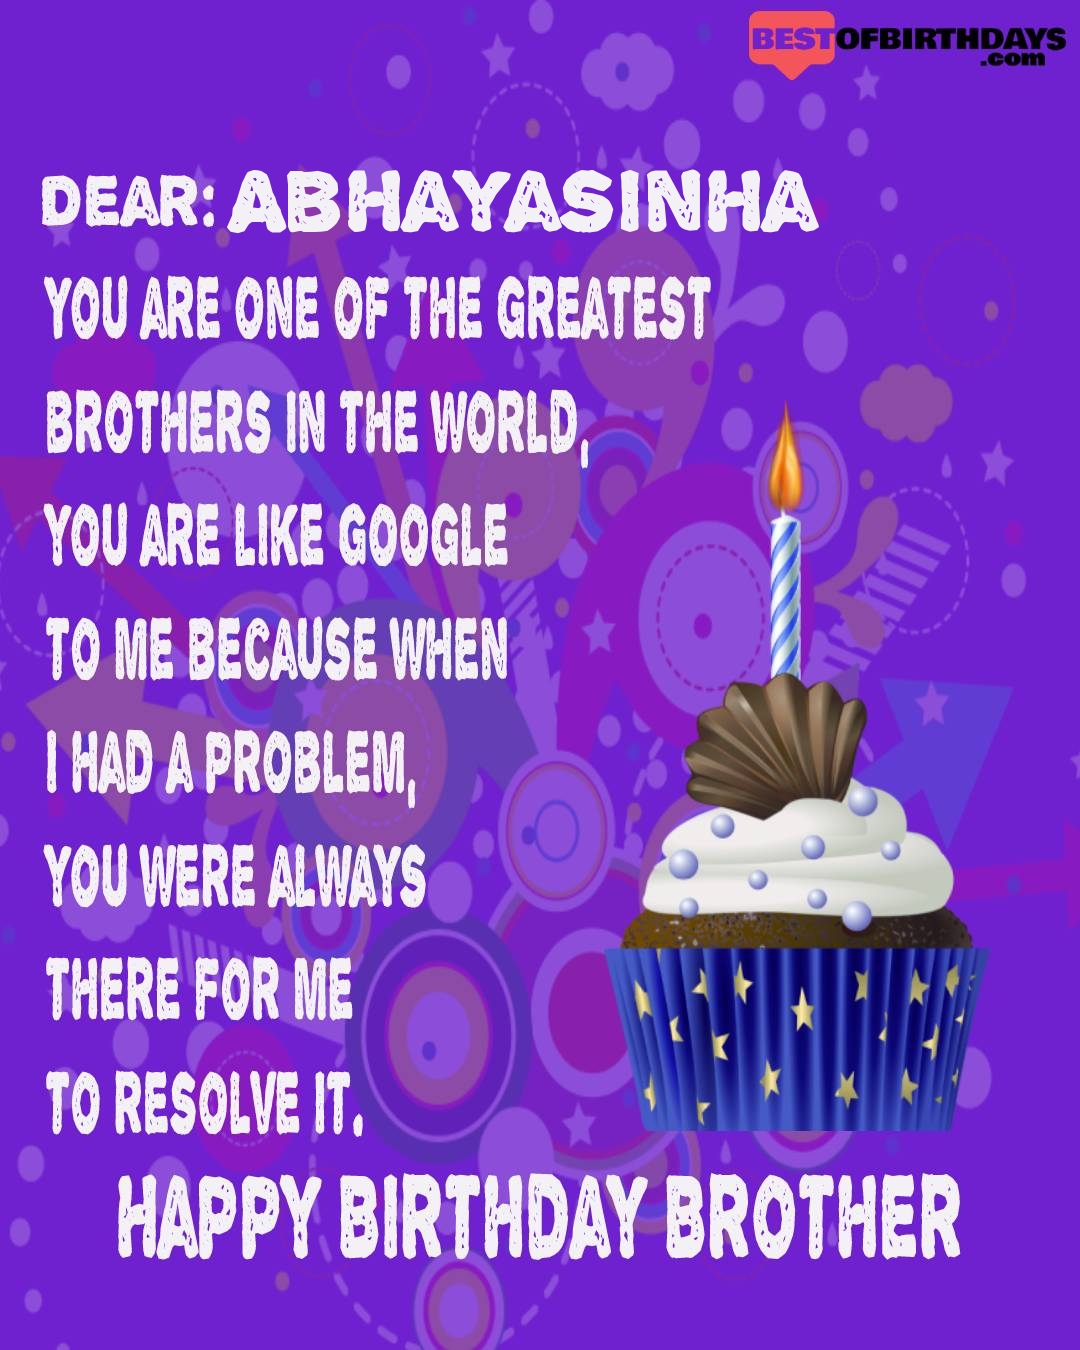 Happy birthday abhayasinha bhai brother bro